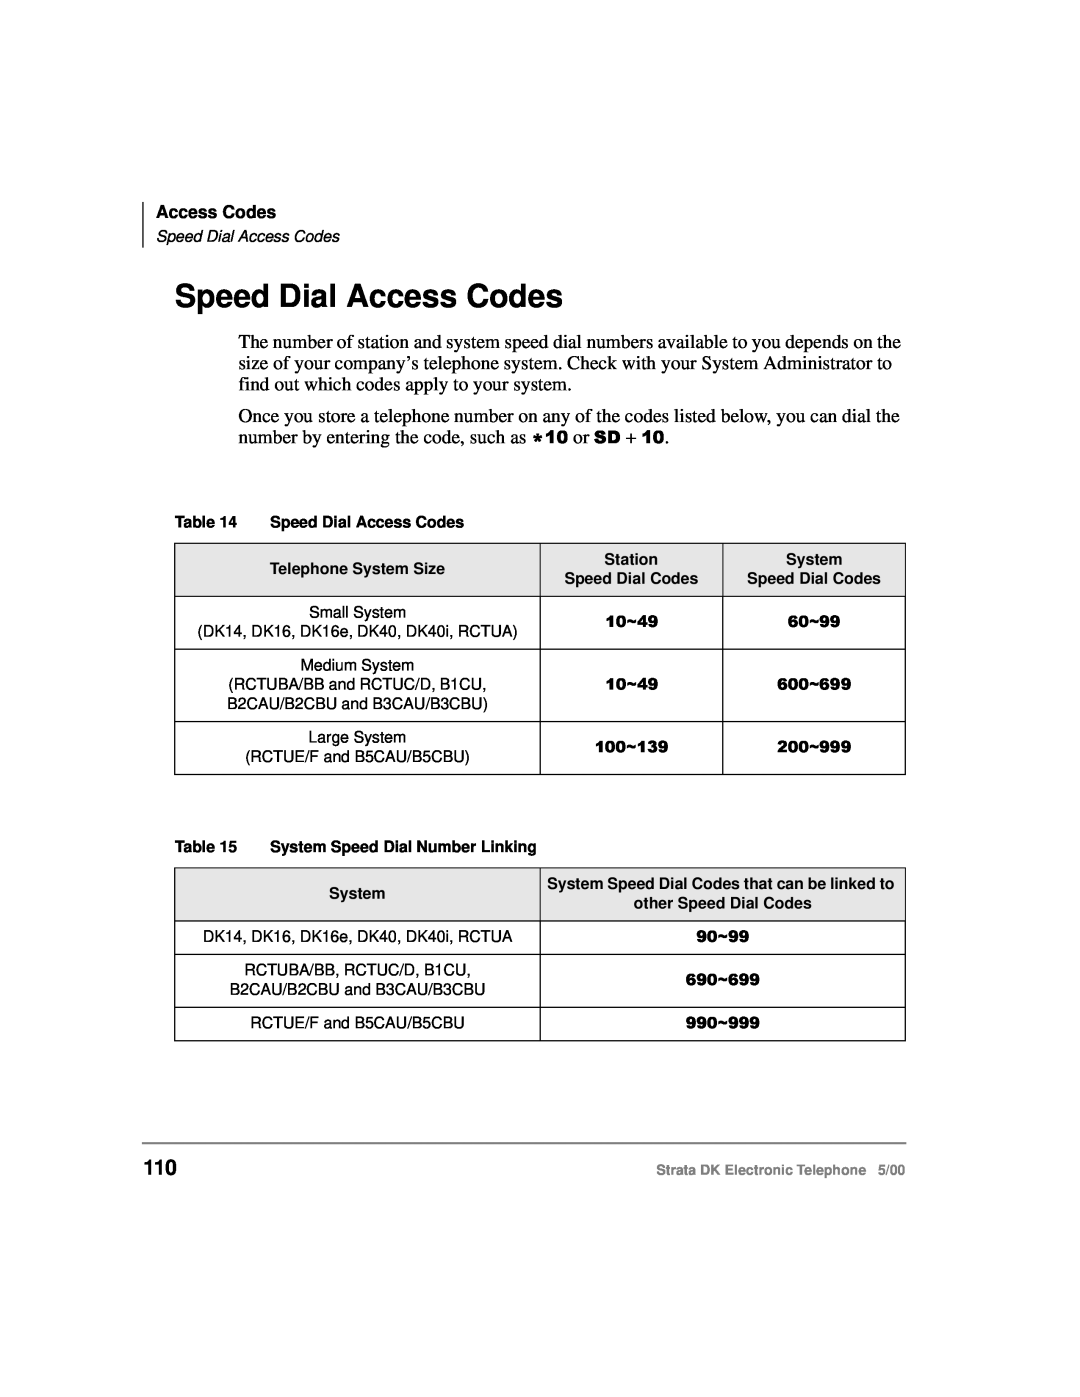 Toshiba Strata DK manual Speed Dial Access Codes 